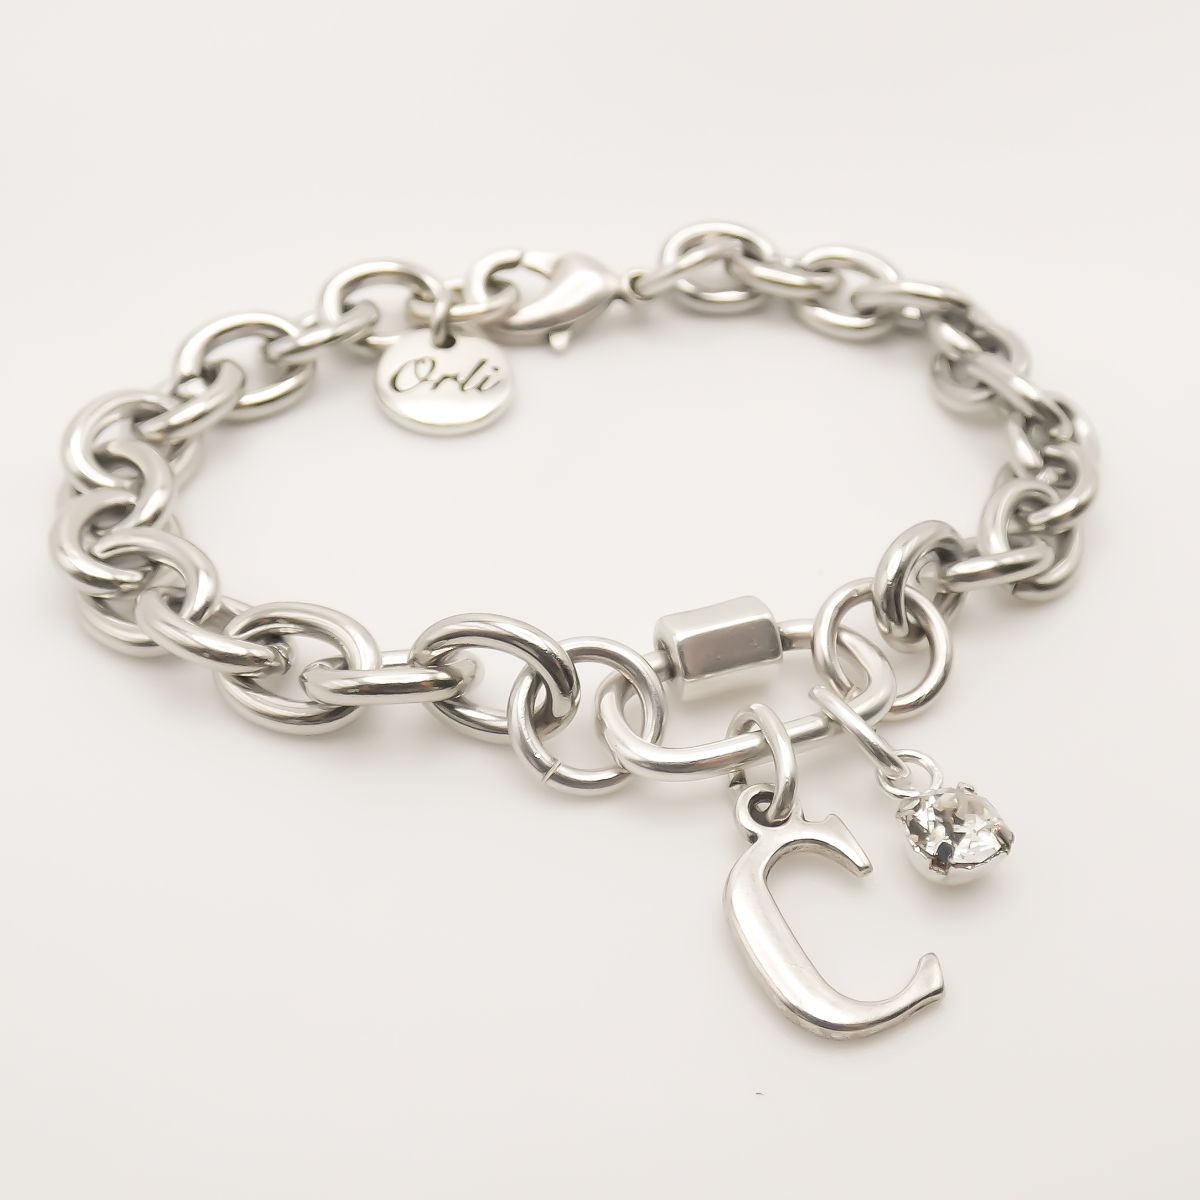 Very Delicate Dull Finish Silver Color Bracelet For Men - Style A677, चांदी  के ब्रेसलेट - Soni Fashion, Rajkot | ID: 26123500497